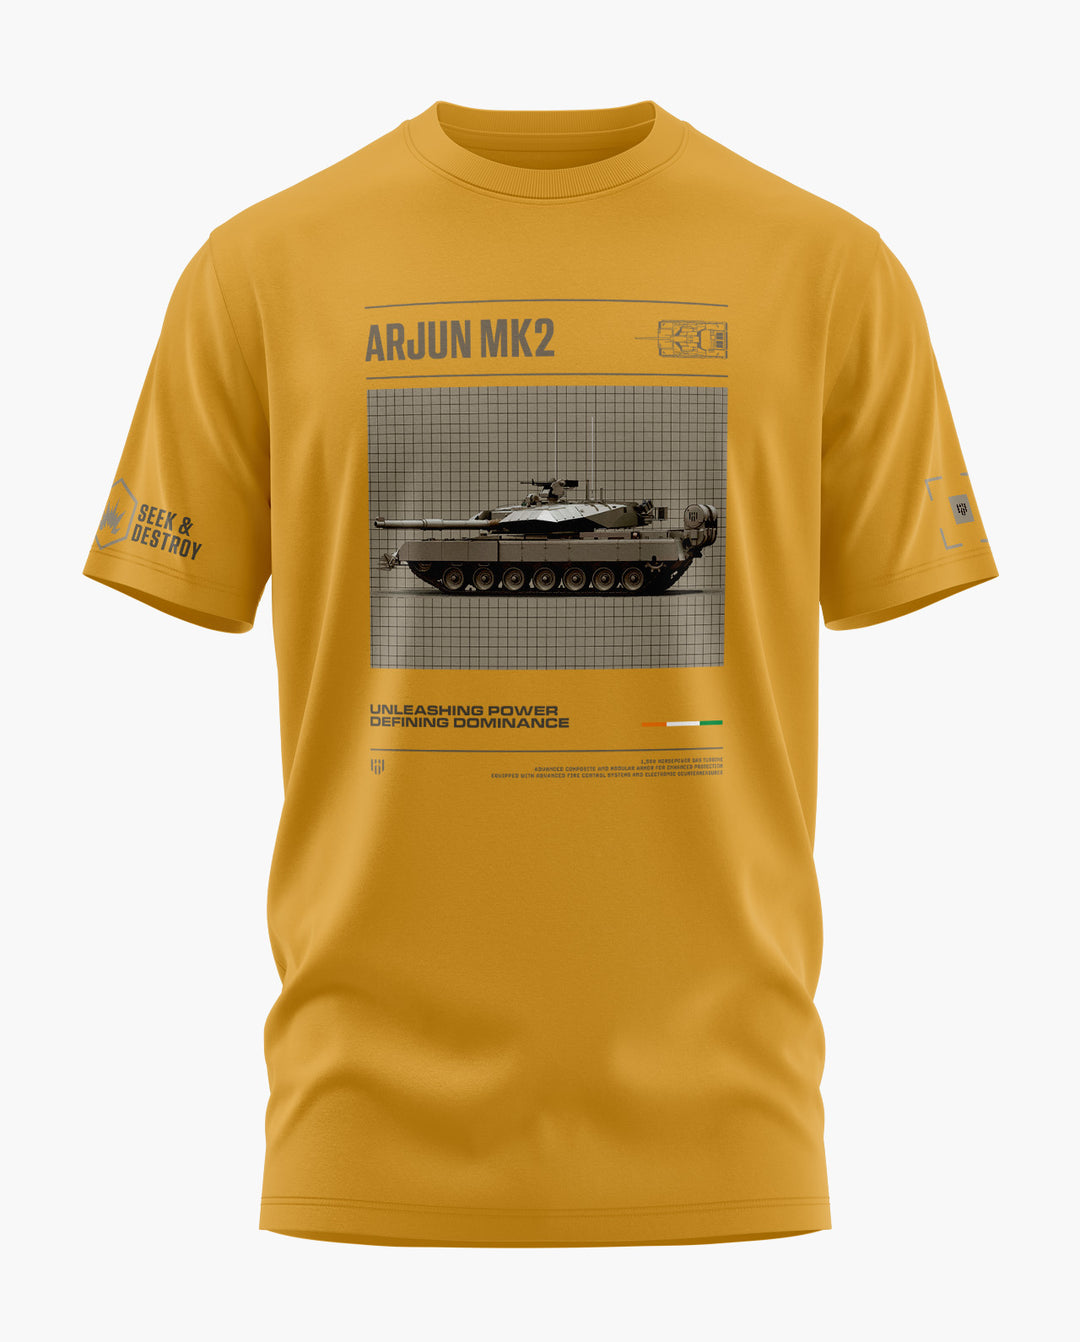 ARJUN MK2 T-Shirt - Aero Armour